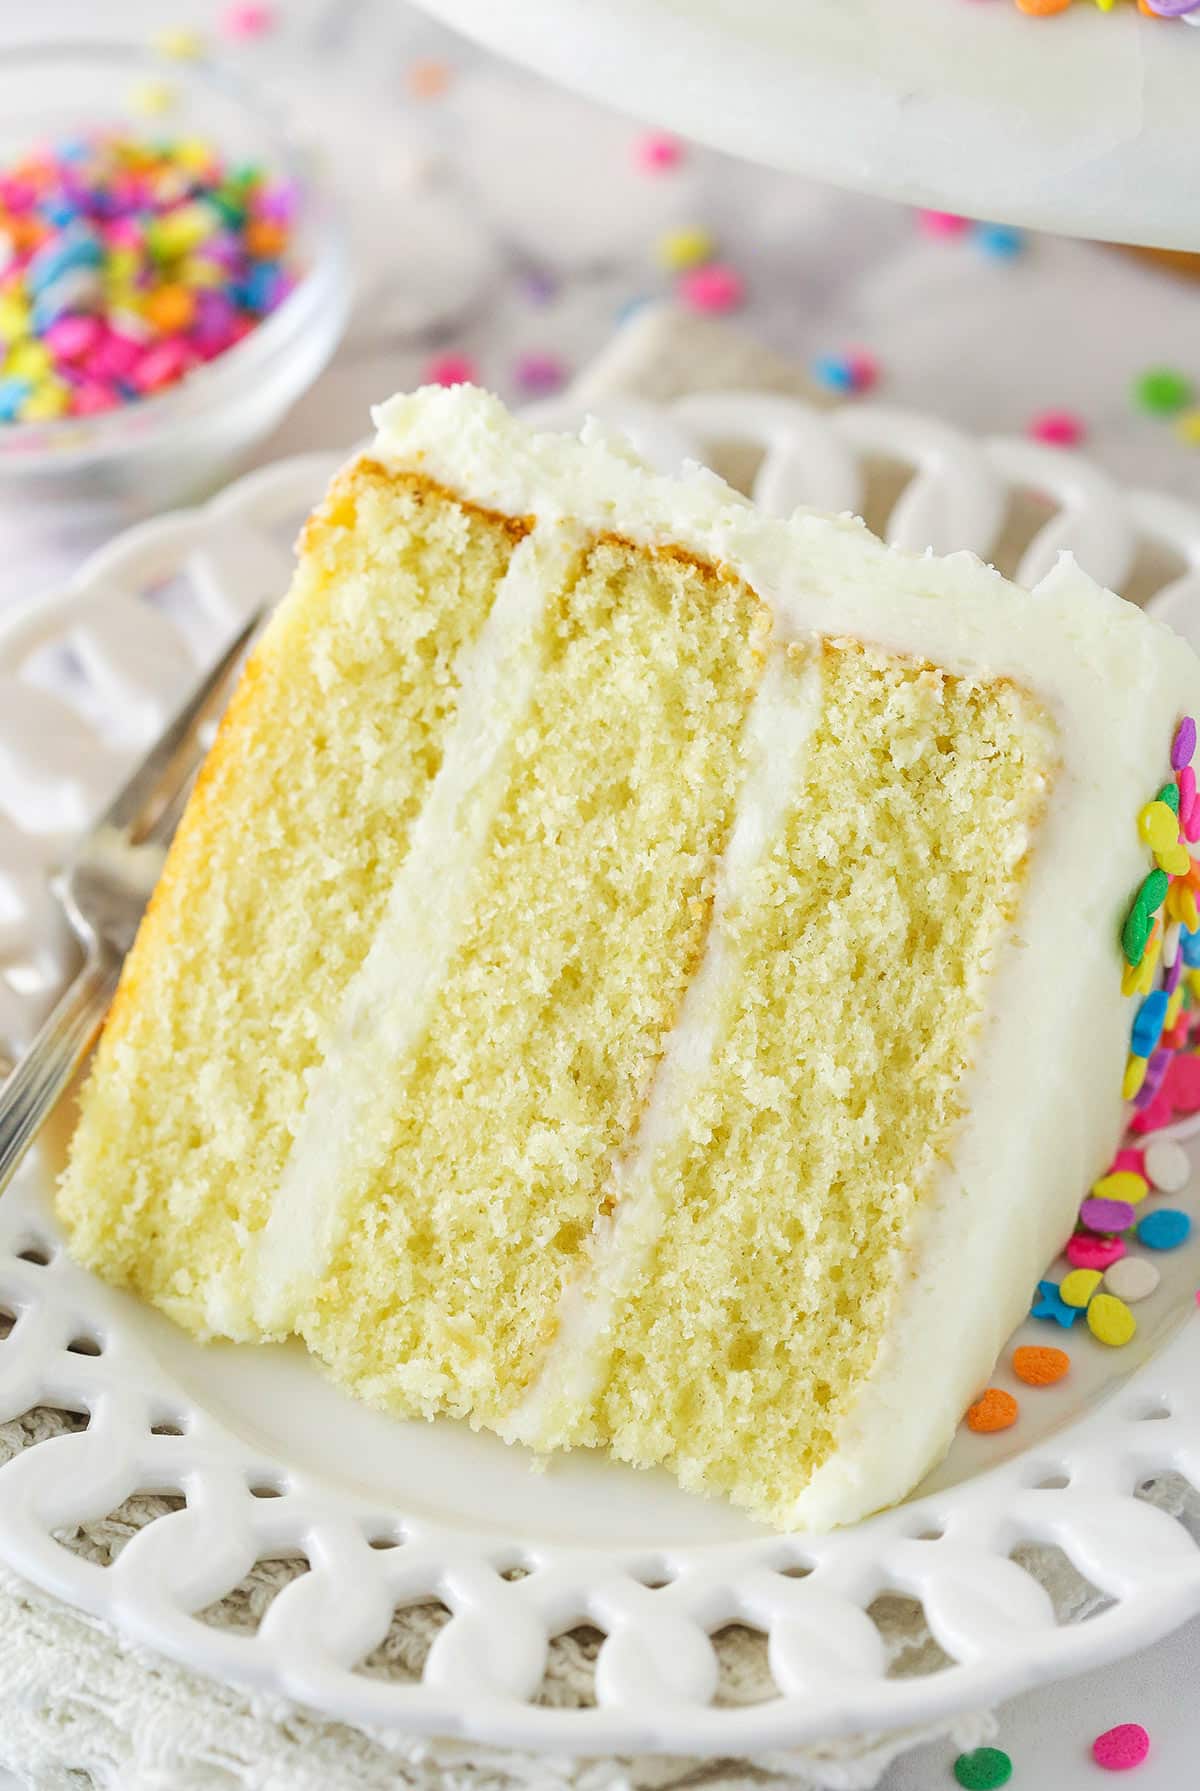 Rainbow cake recipe - BBC Food